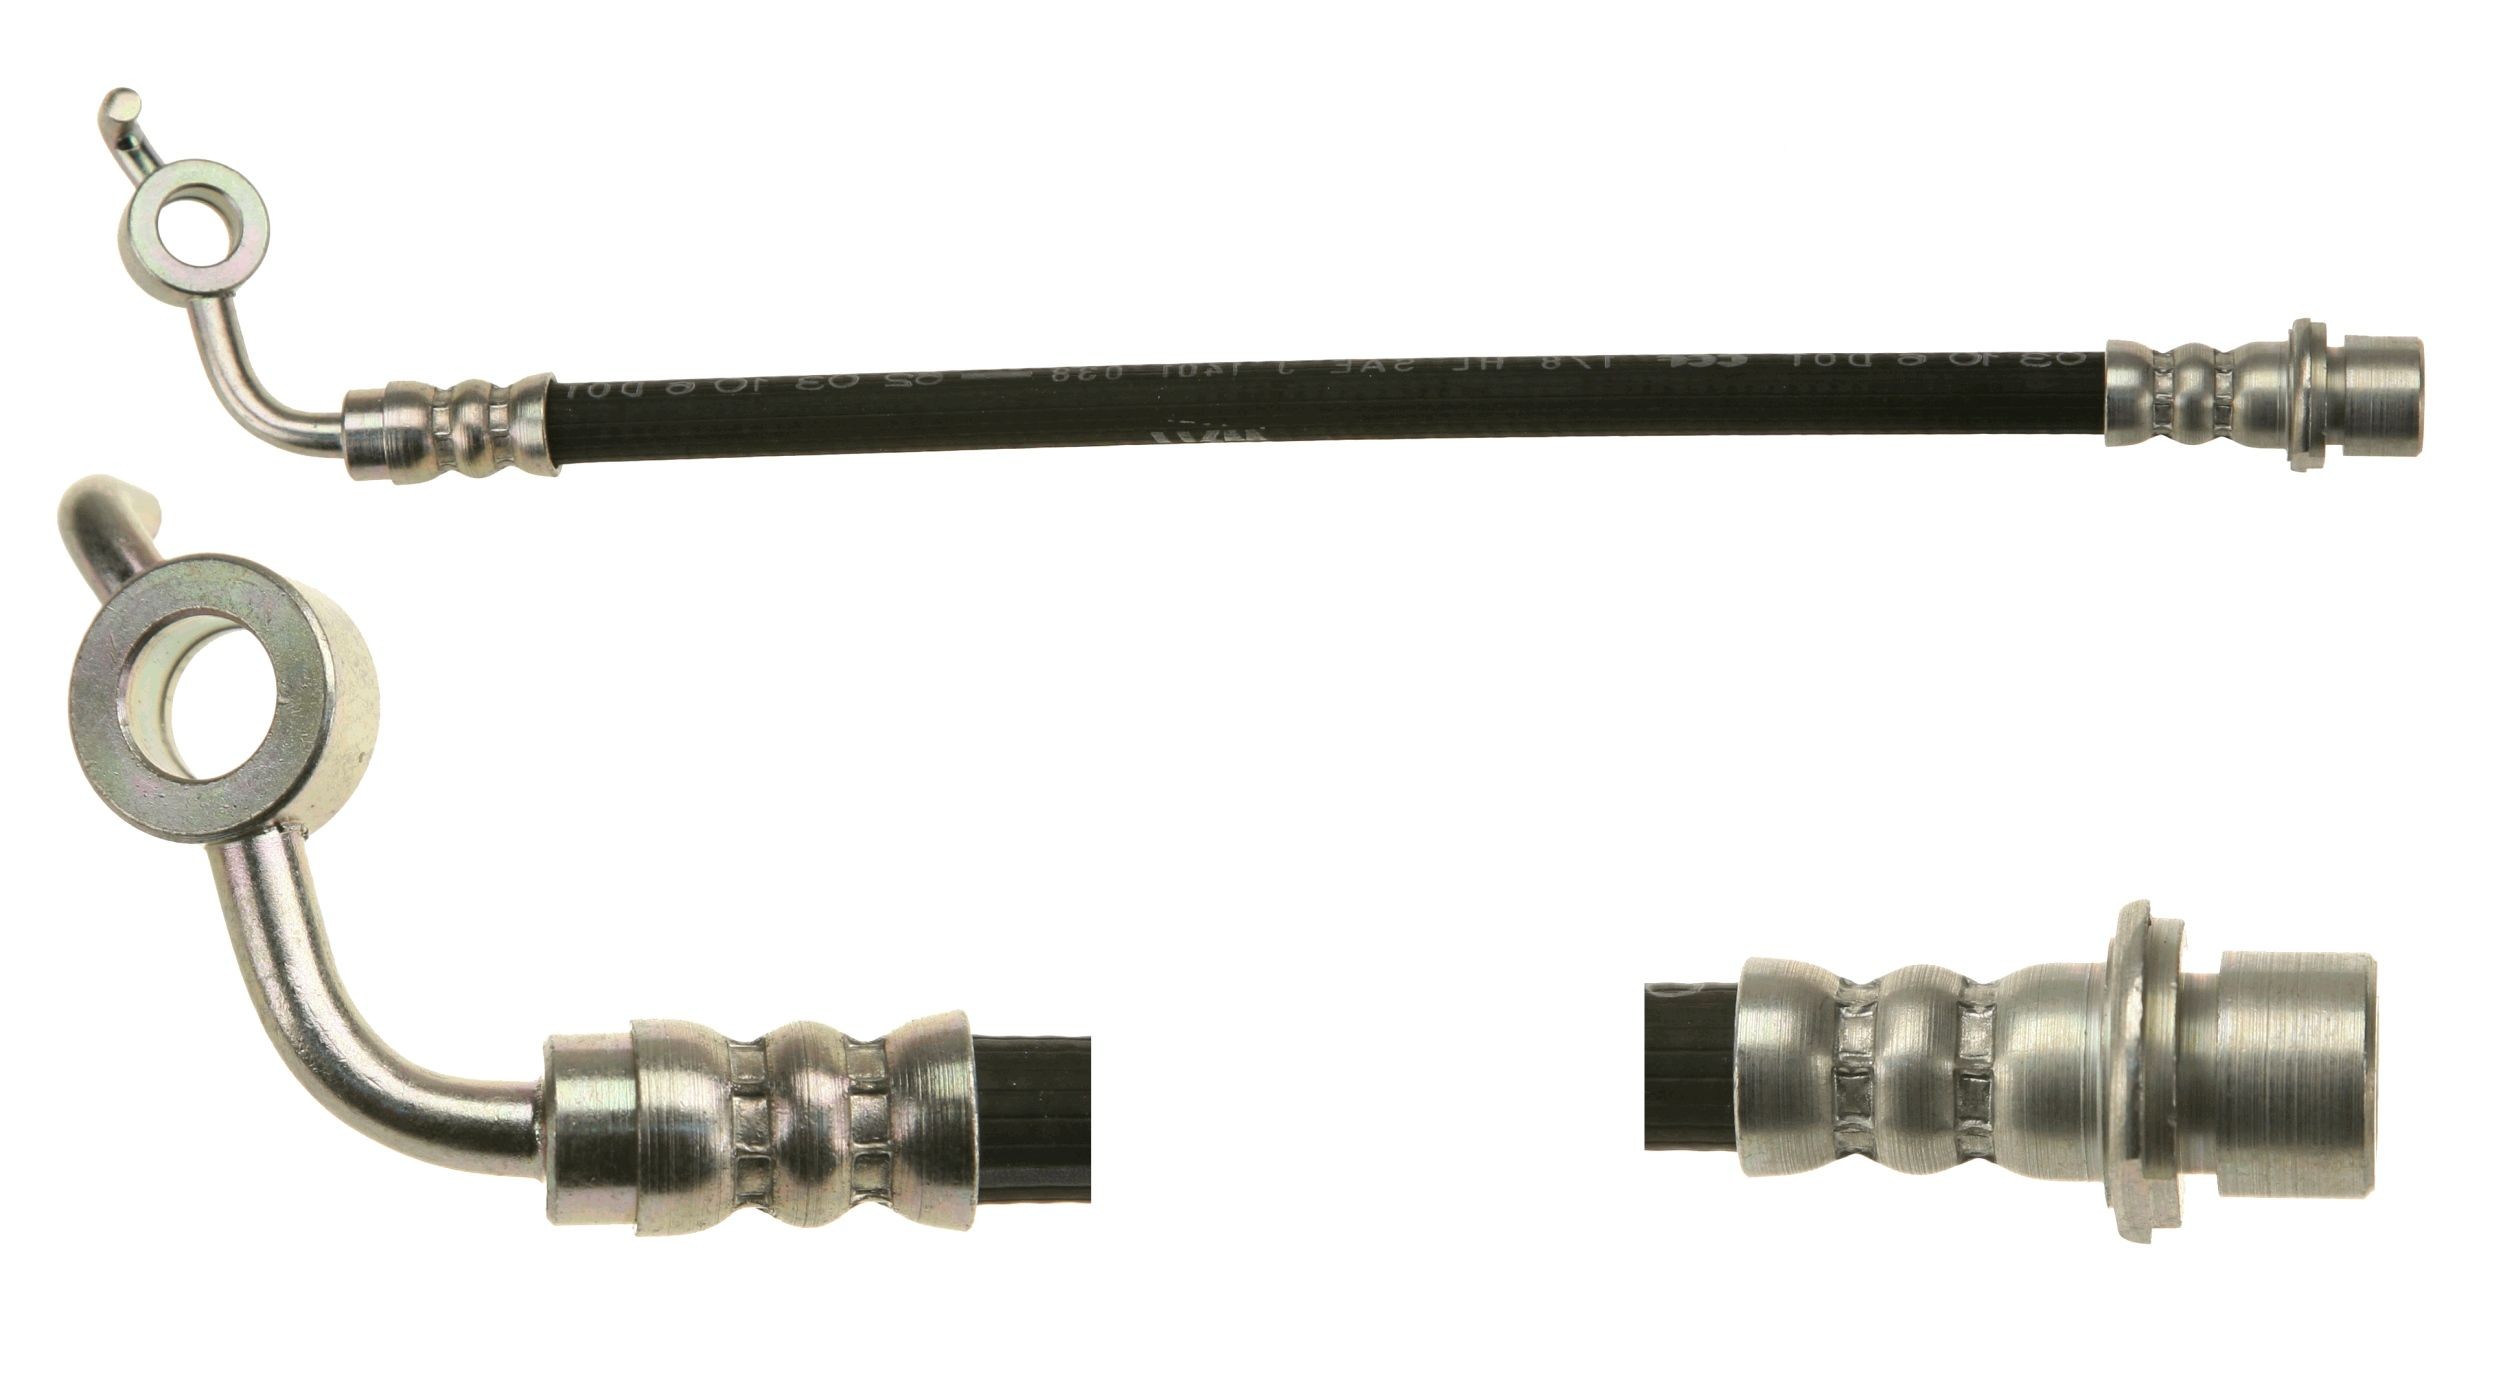 TRW 258 mm, M10x1, Internal Thread Length: 258mm, Thread Size 1: M10x1, Thread Size 2: Banjo Brake line PHD698 buy